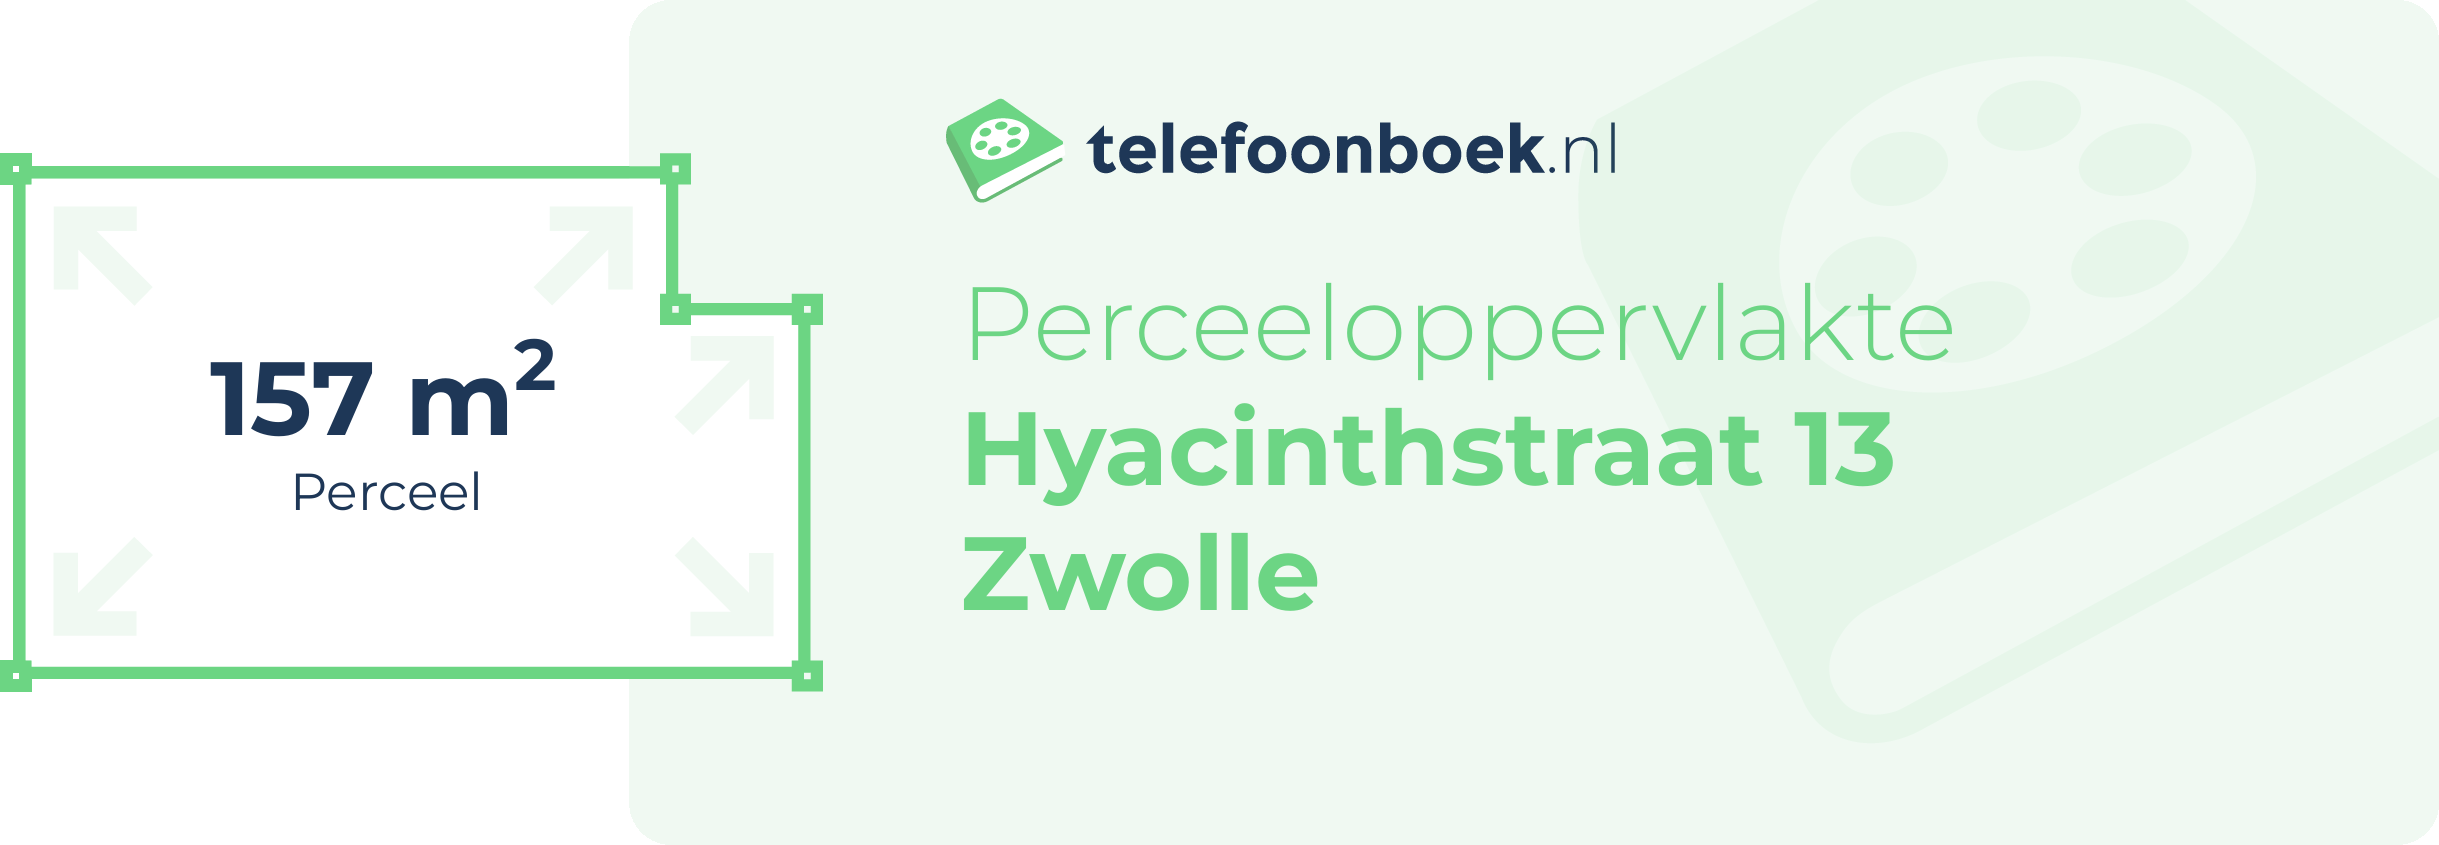 Perceeloppervlakte Hyacinthstraat 13 Zwolle